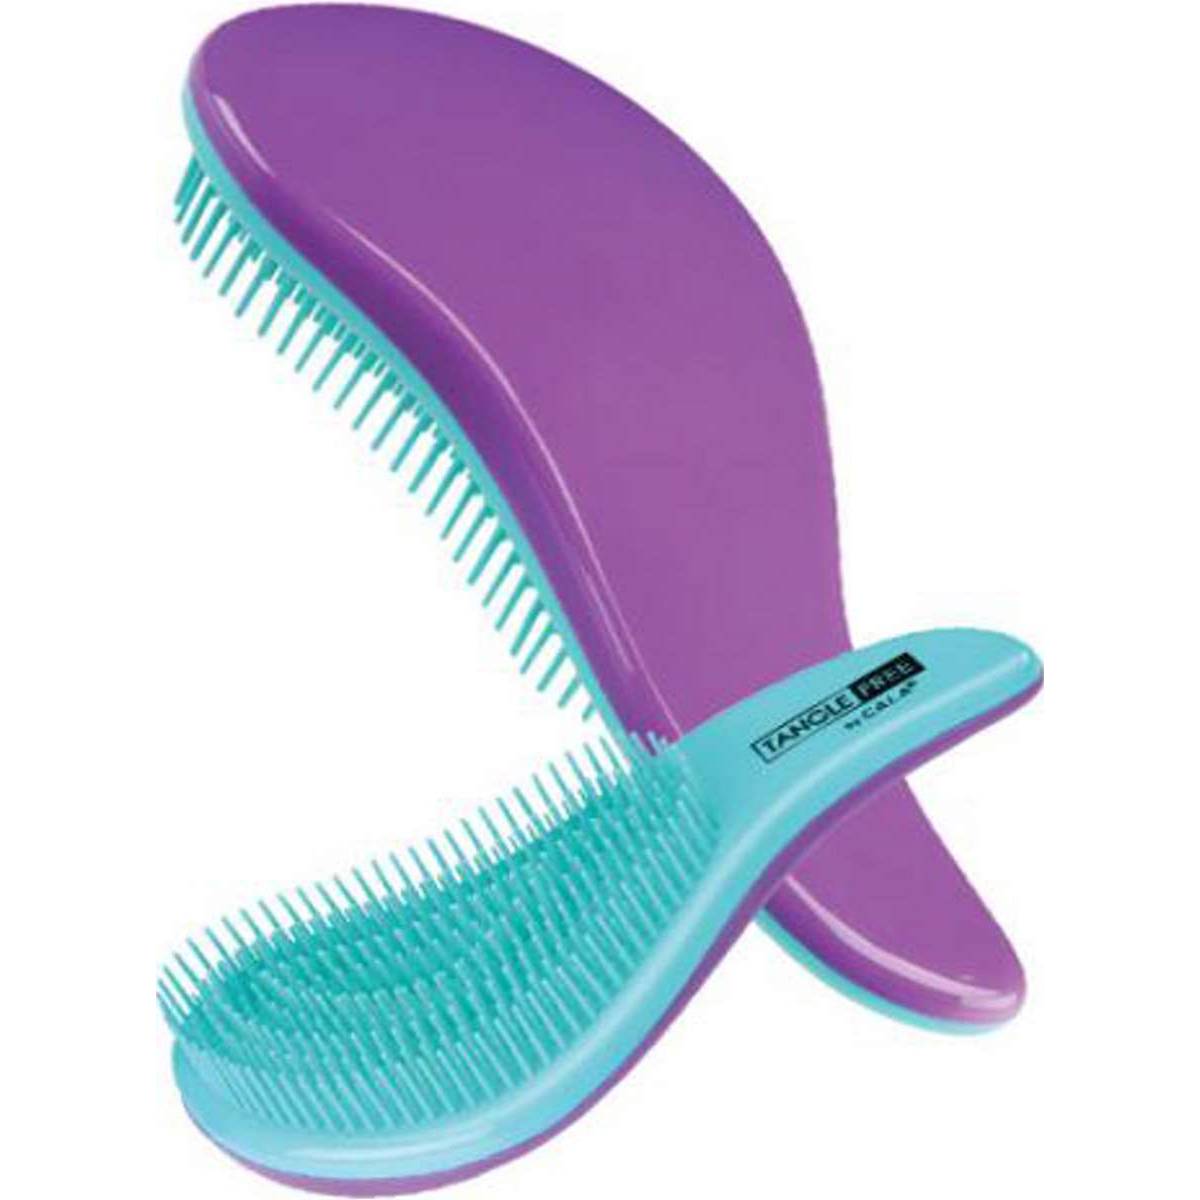 CALA Pro Tangle Free Hair Brush - Turquoise/Purple (66741)